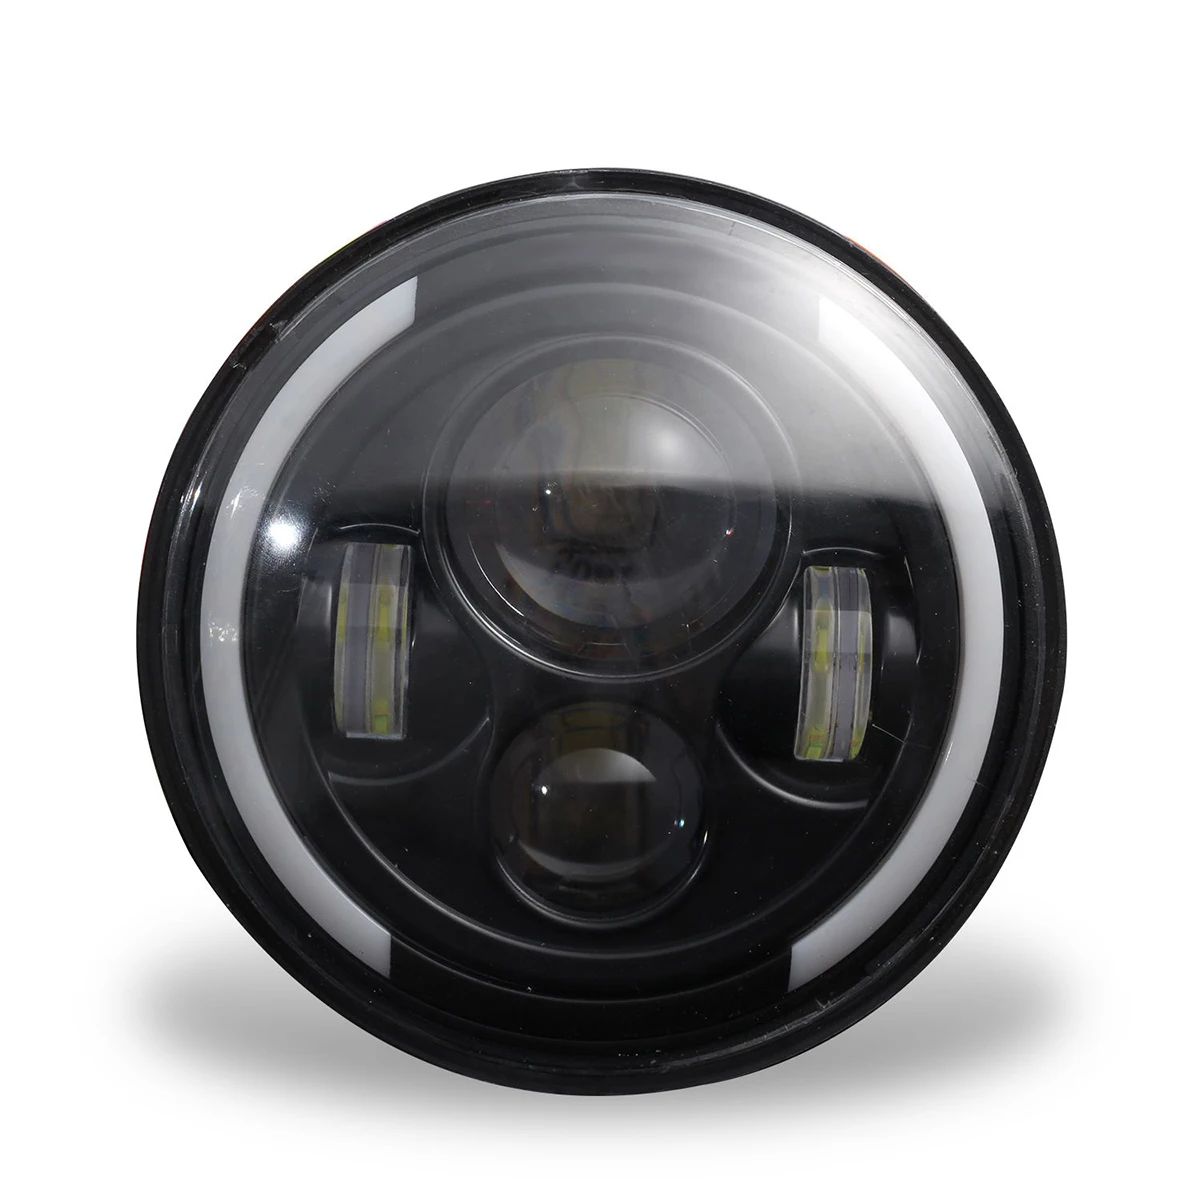 

1PC 7 Inch 150W/300W LED Headlight Super Bright LED Light Head Lamp For Jeep Wrangler JK TJ CJ 7inch